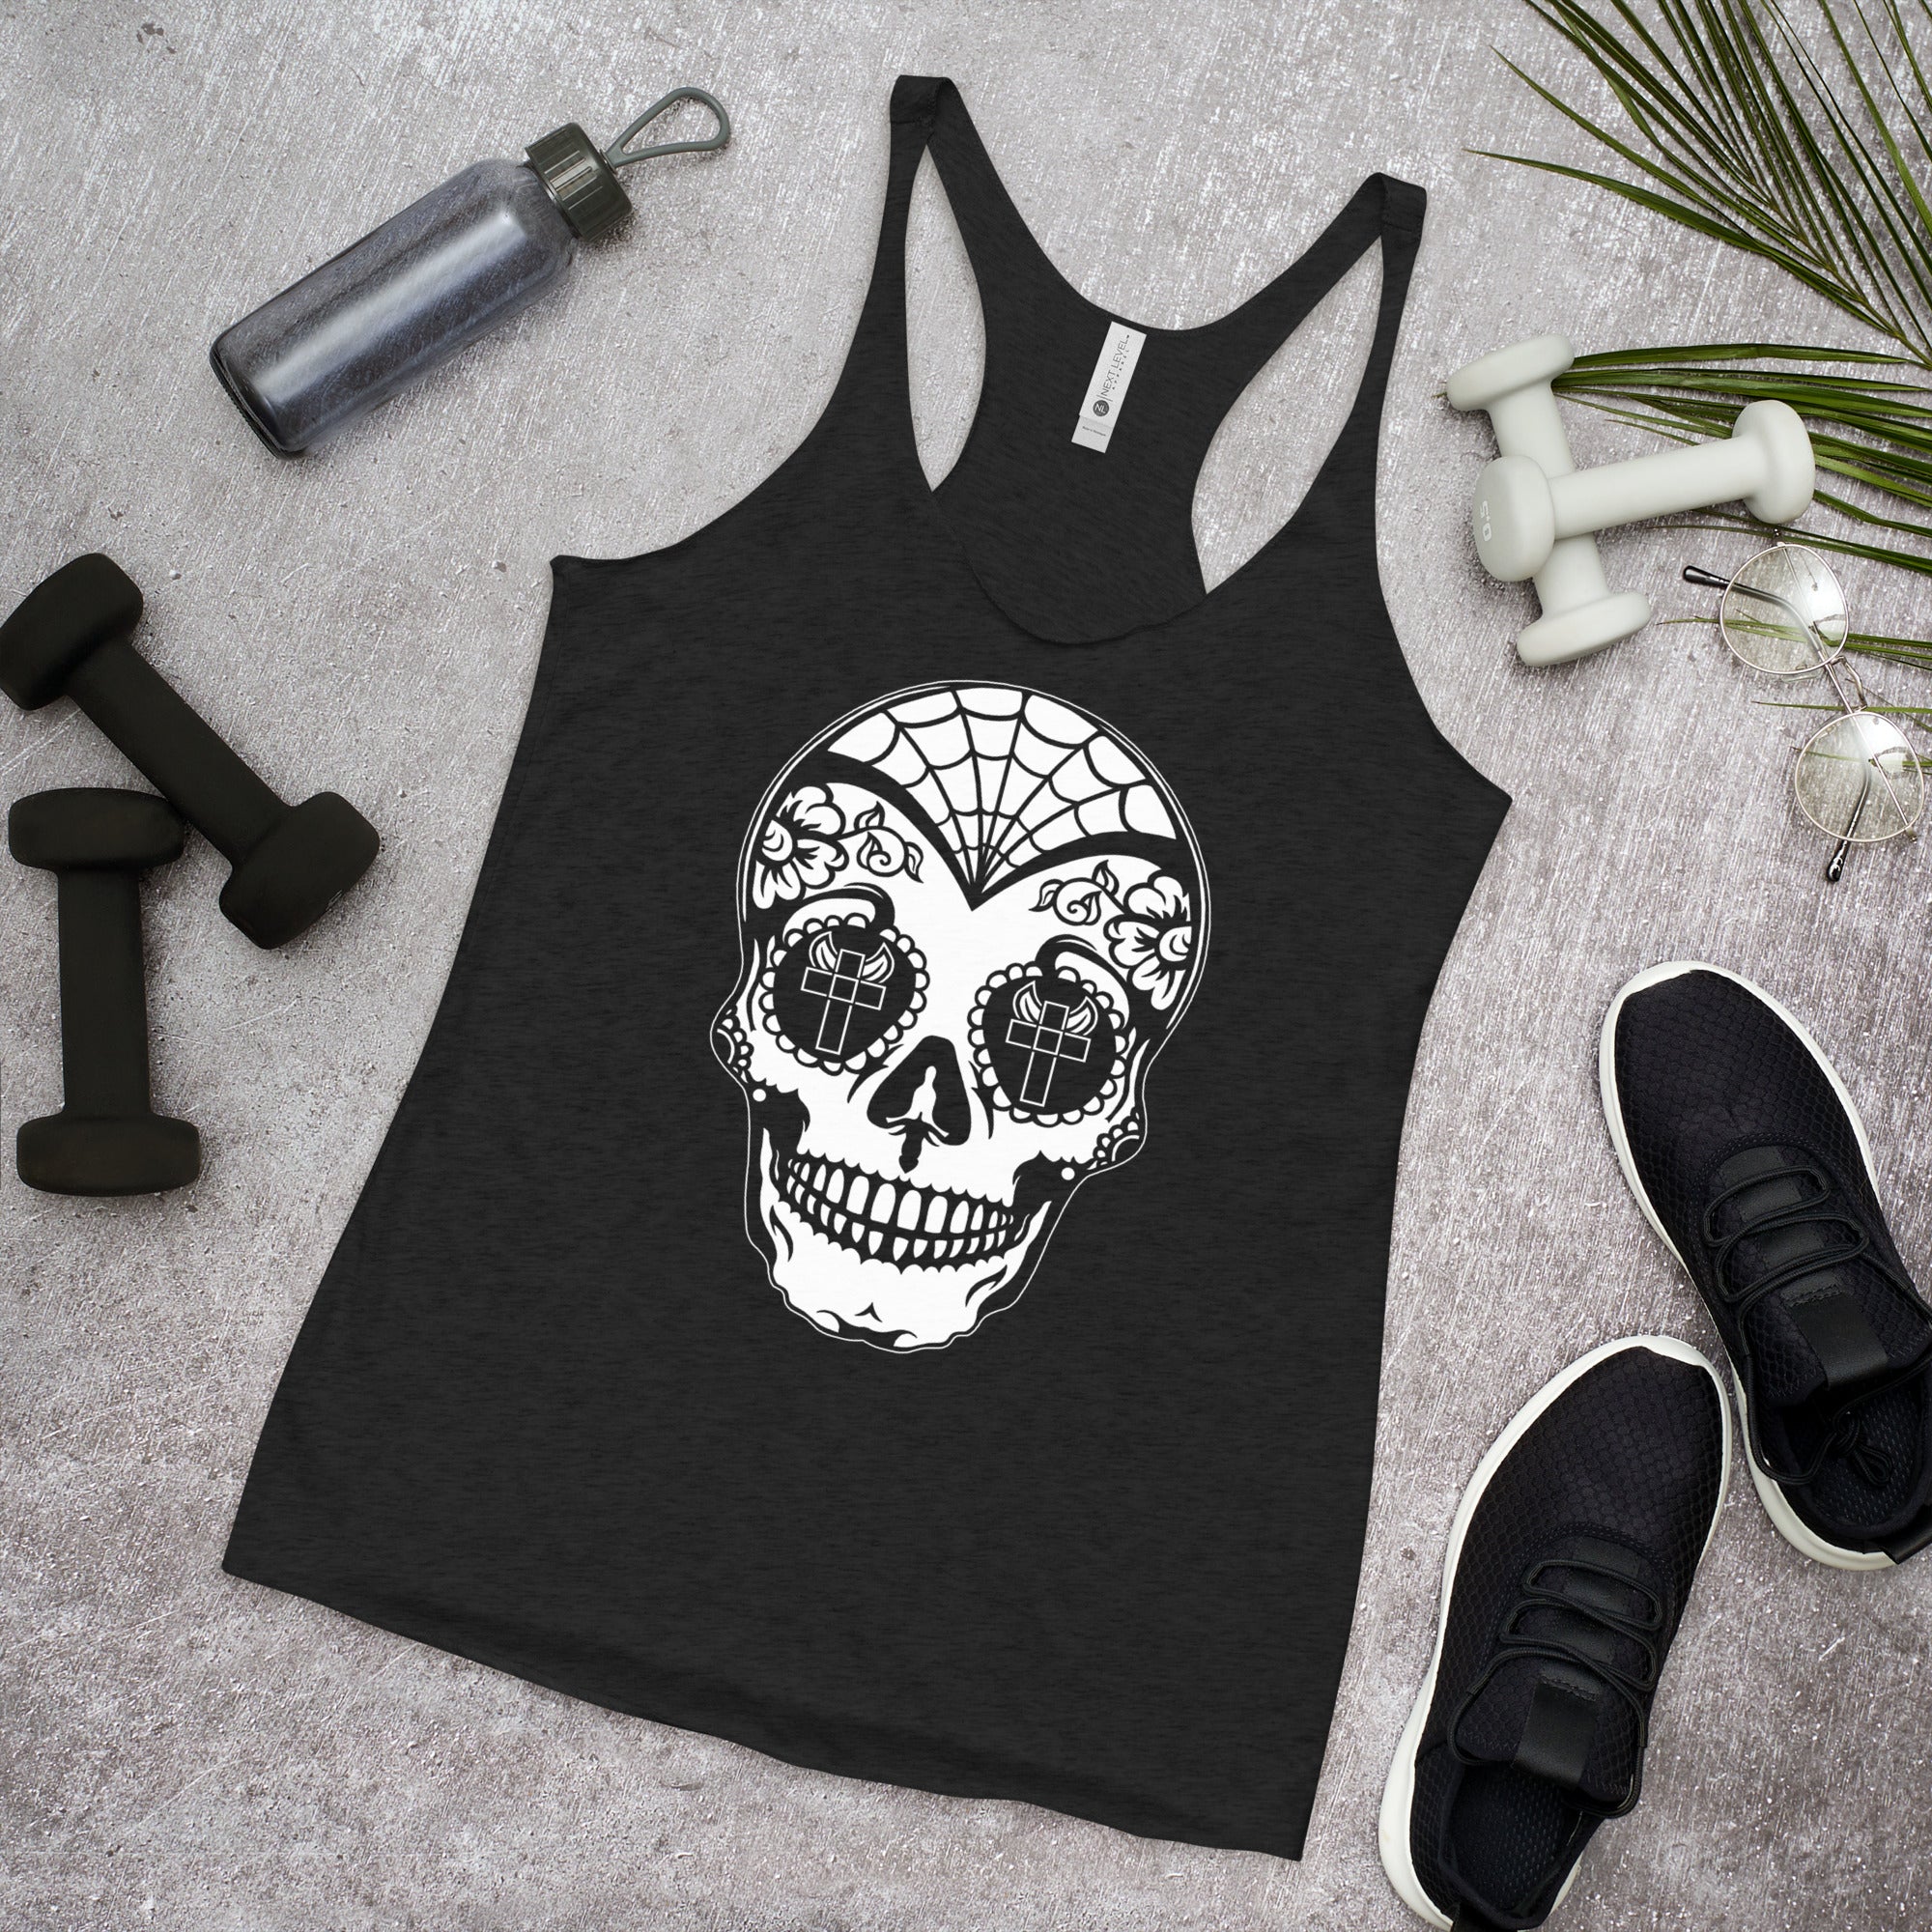 White Sugar Skull Day of the Dead Halloween Women's Racerback Tank Top Shirt - Edge of Life Designs